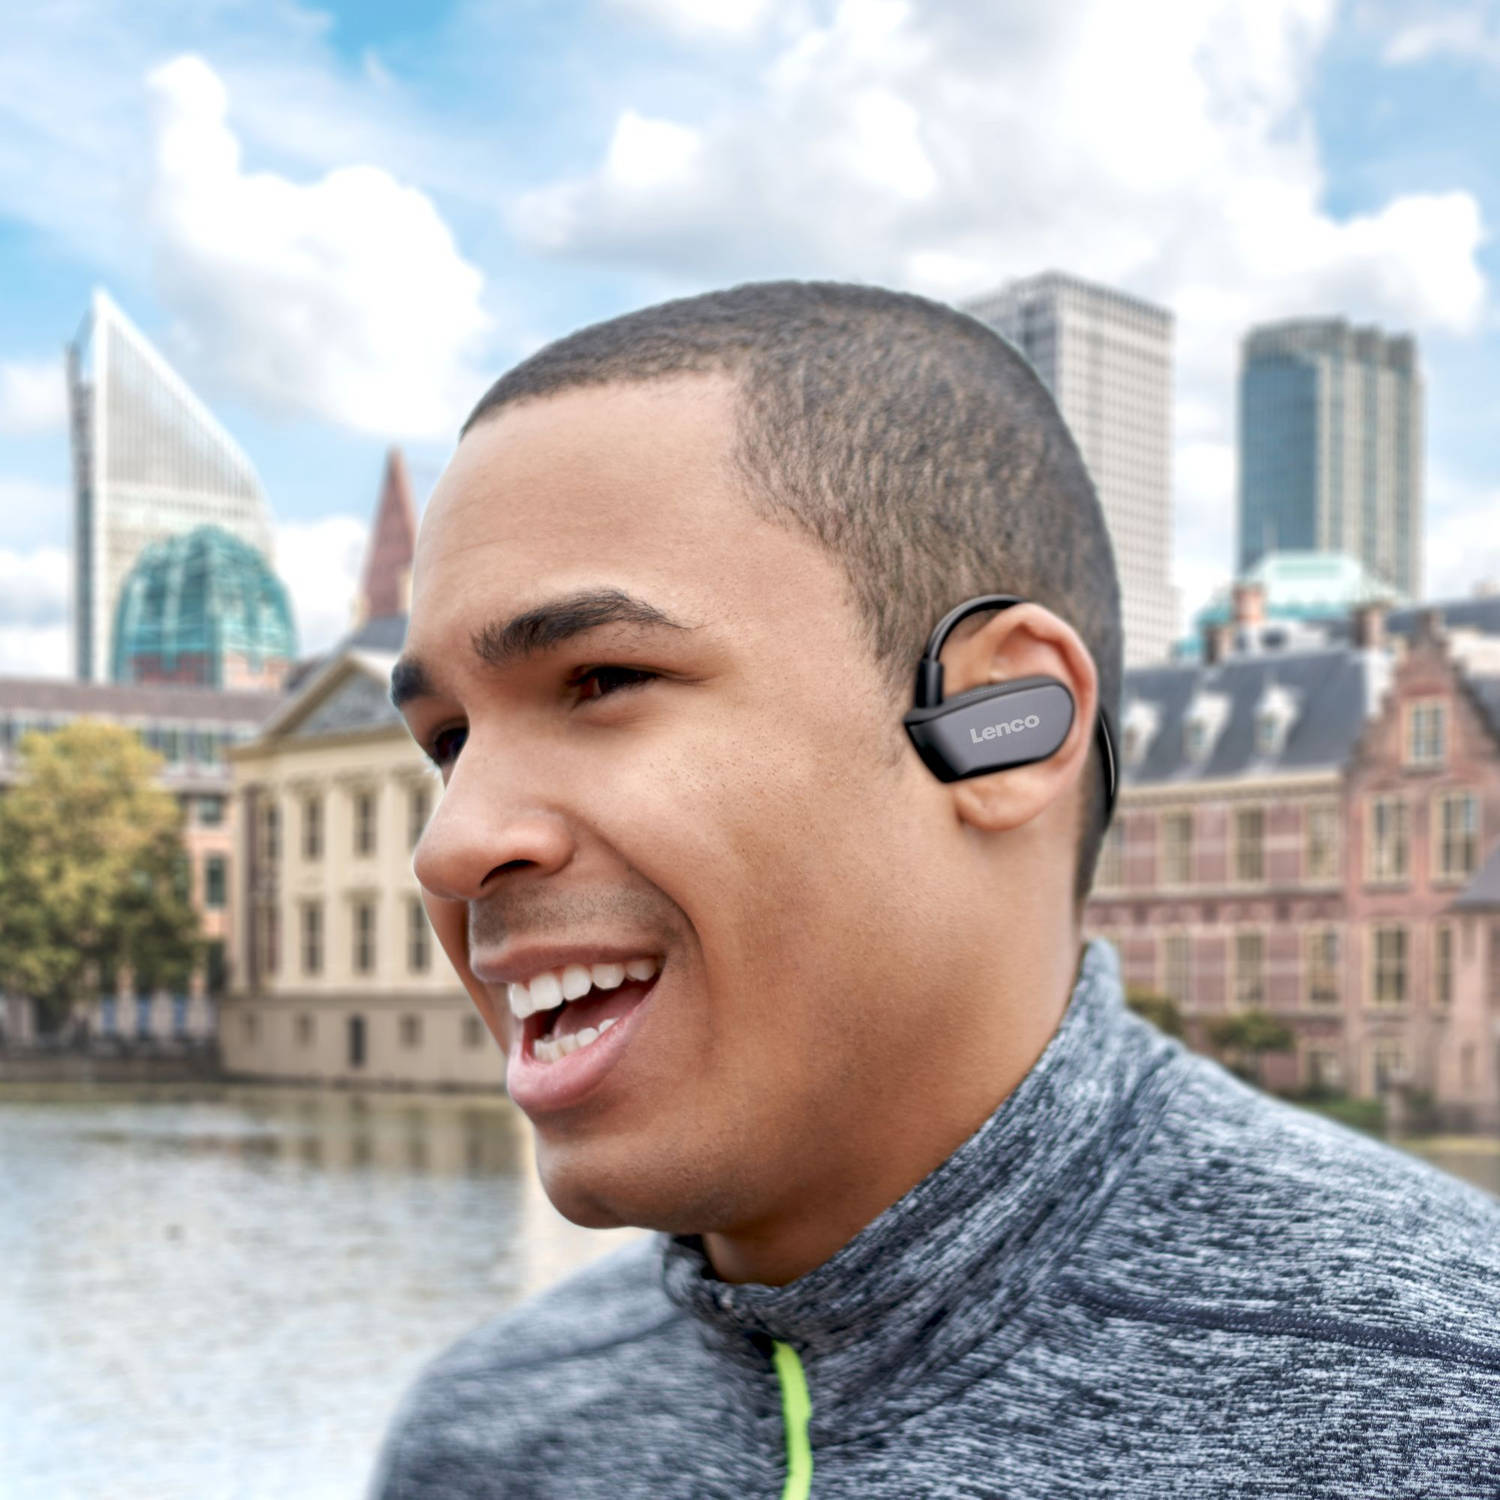 Succes strip steno Bluetooth® waterproof sport koptelefoon met 8 gb MP3-speler Lenco BTX-860BK  Zwart-Grijs | Blokker